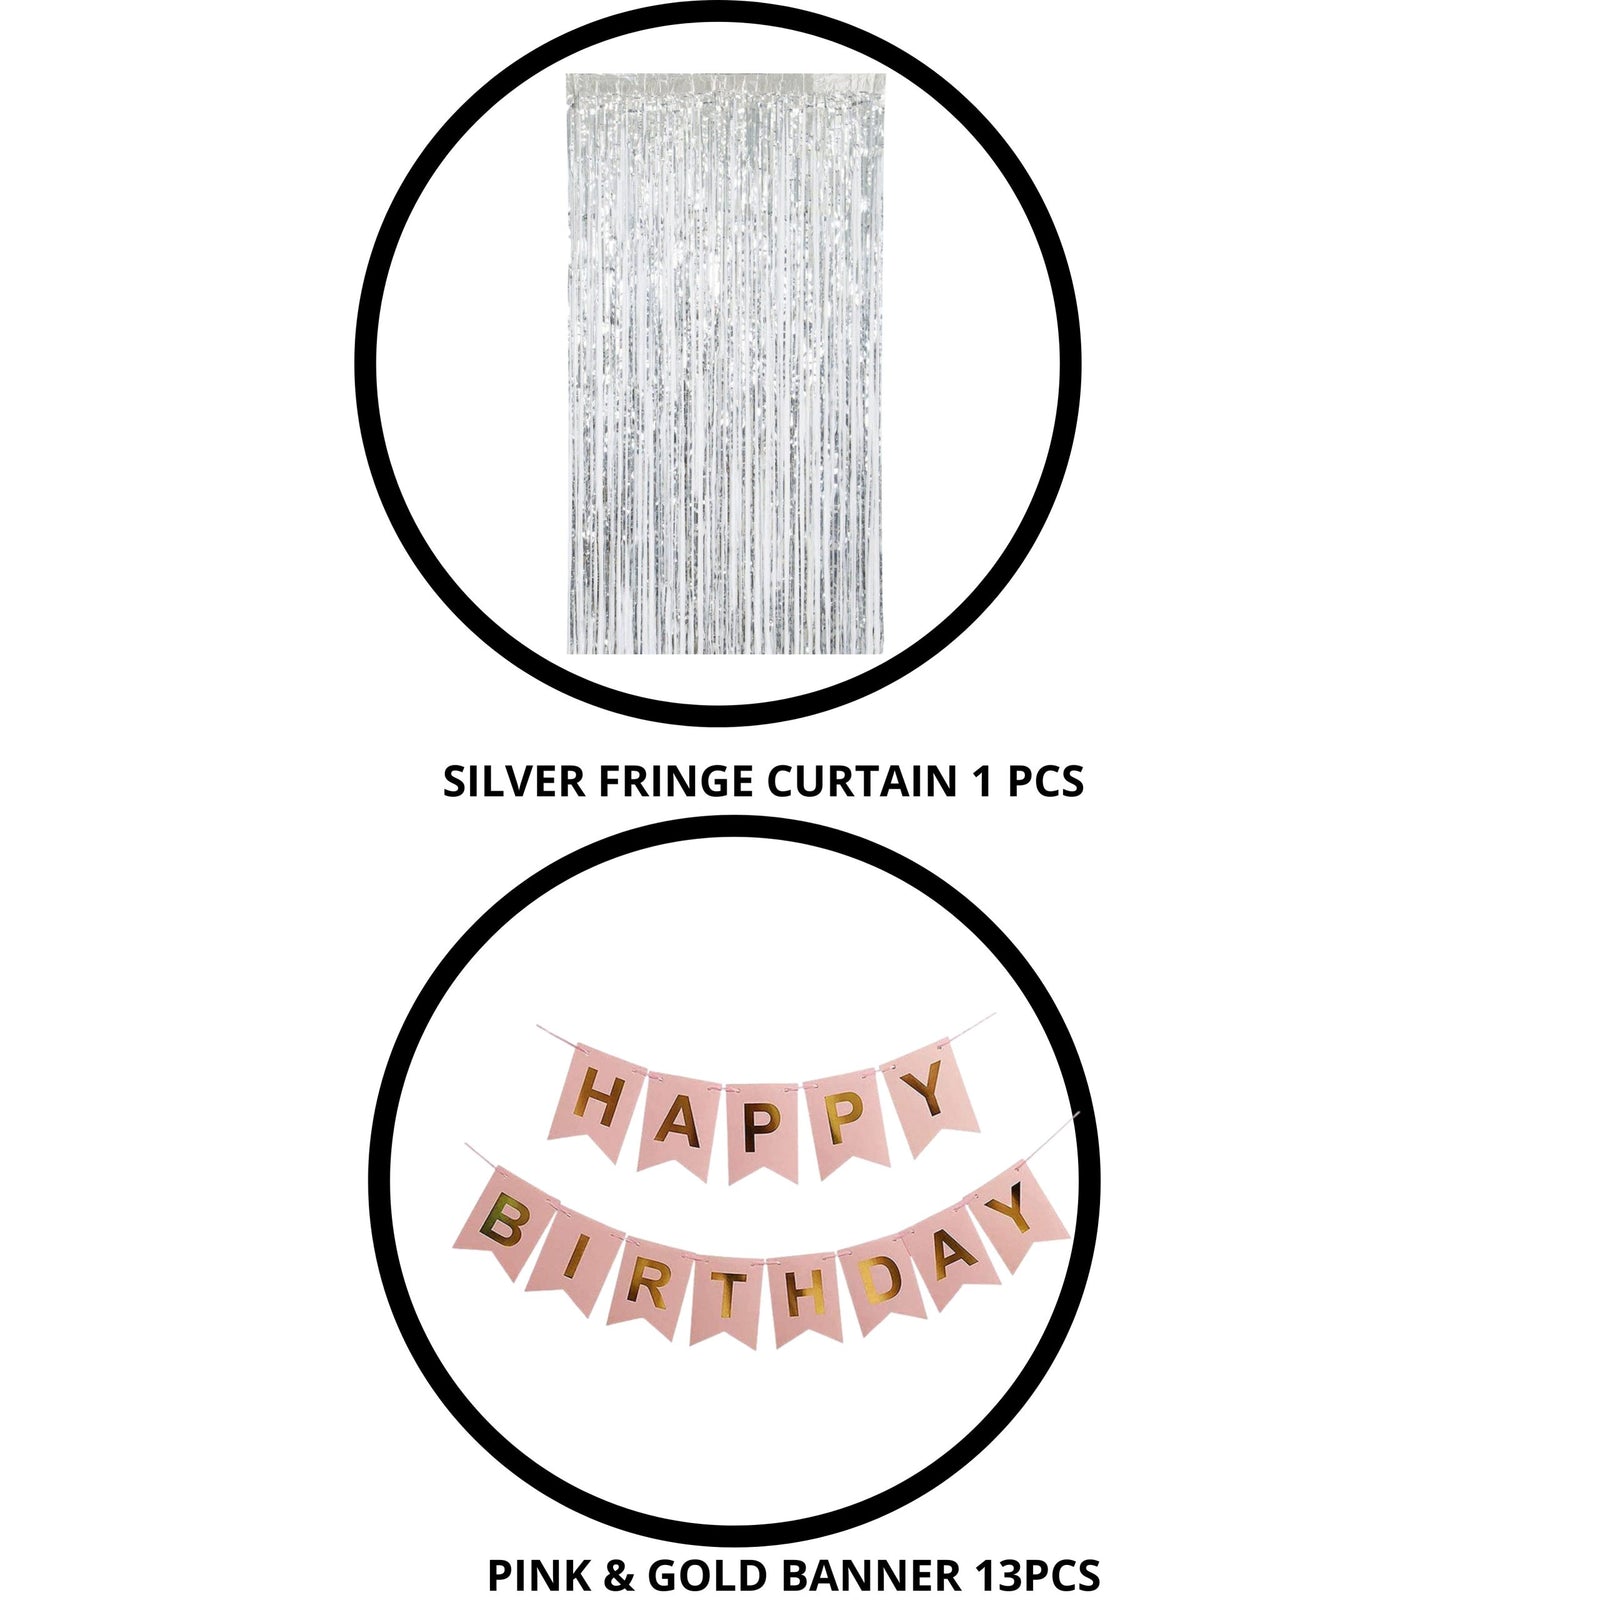 1st Birthday Decoration For Girl Happy Birthday Foil Balloon, Metallic Balloons Combo Girls Birthday Supplies (109 Pcs)